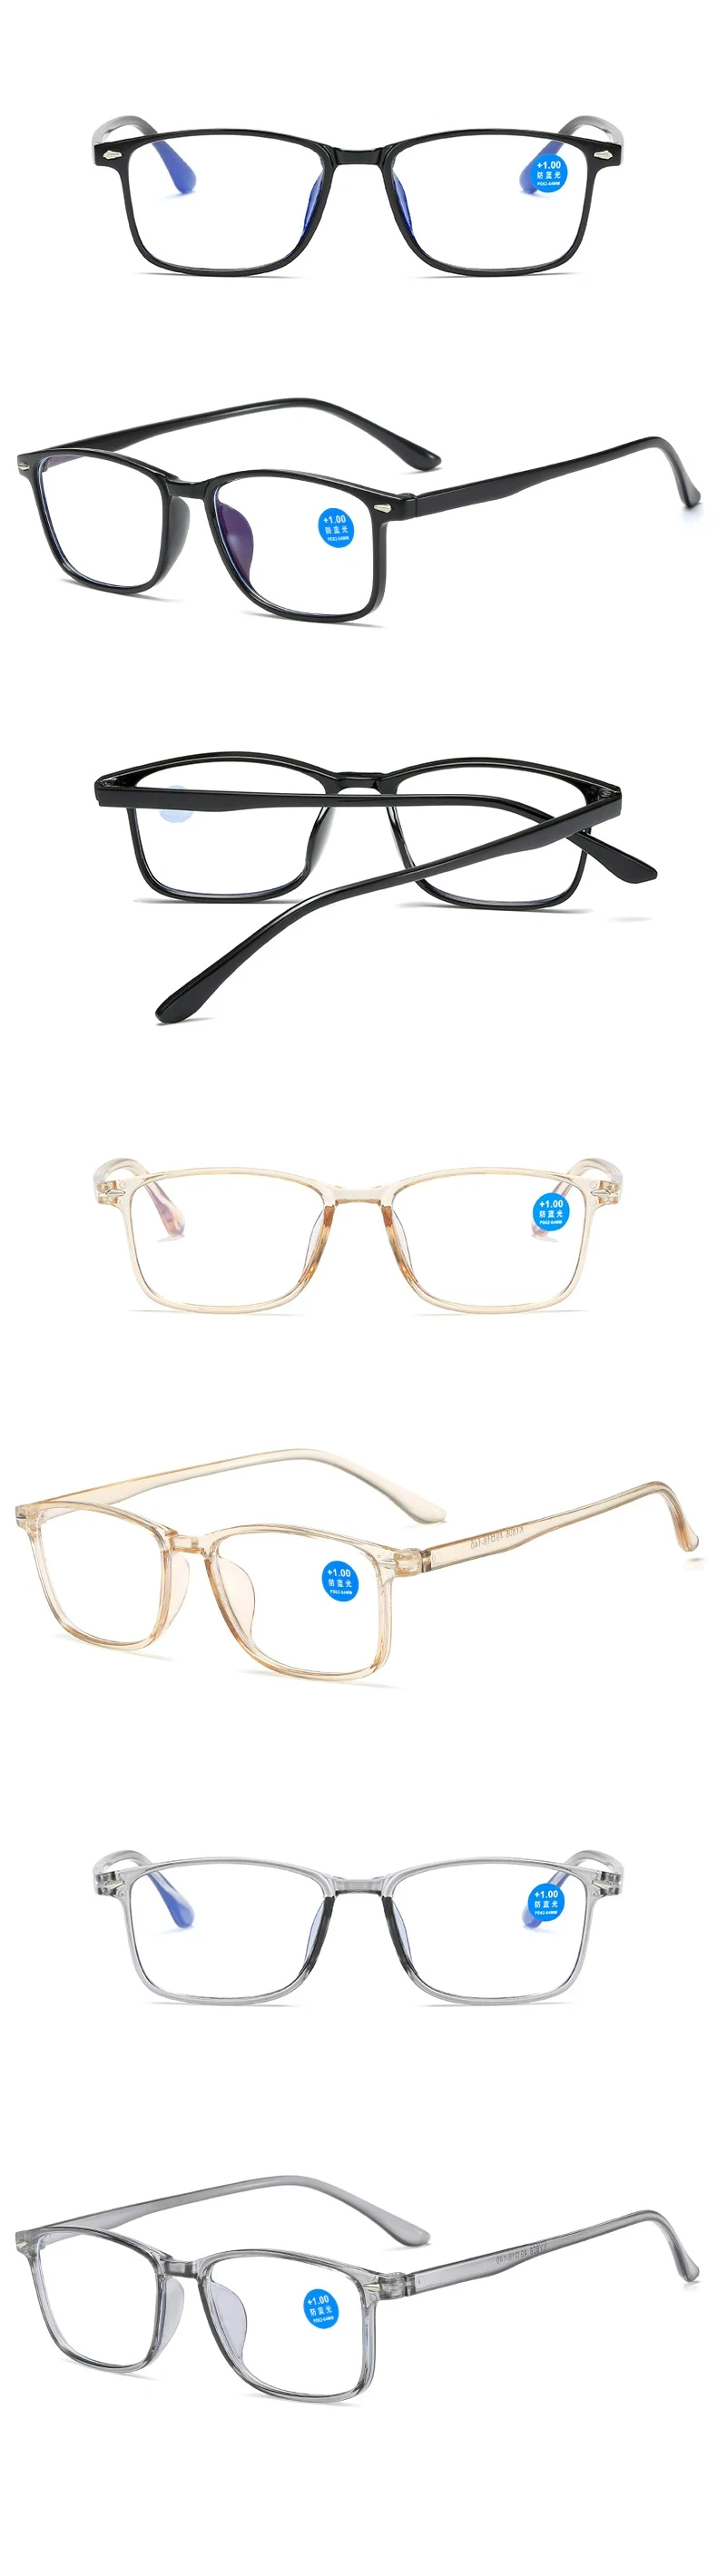 Wholesale Cheap Stock Classical Fashion Design Anti Blue Light Eyewear Optical Frame Tr90 Eyeglasses Frames Old Men or Women Reading Glasses